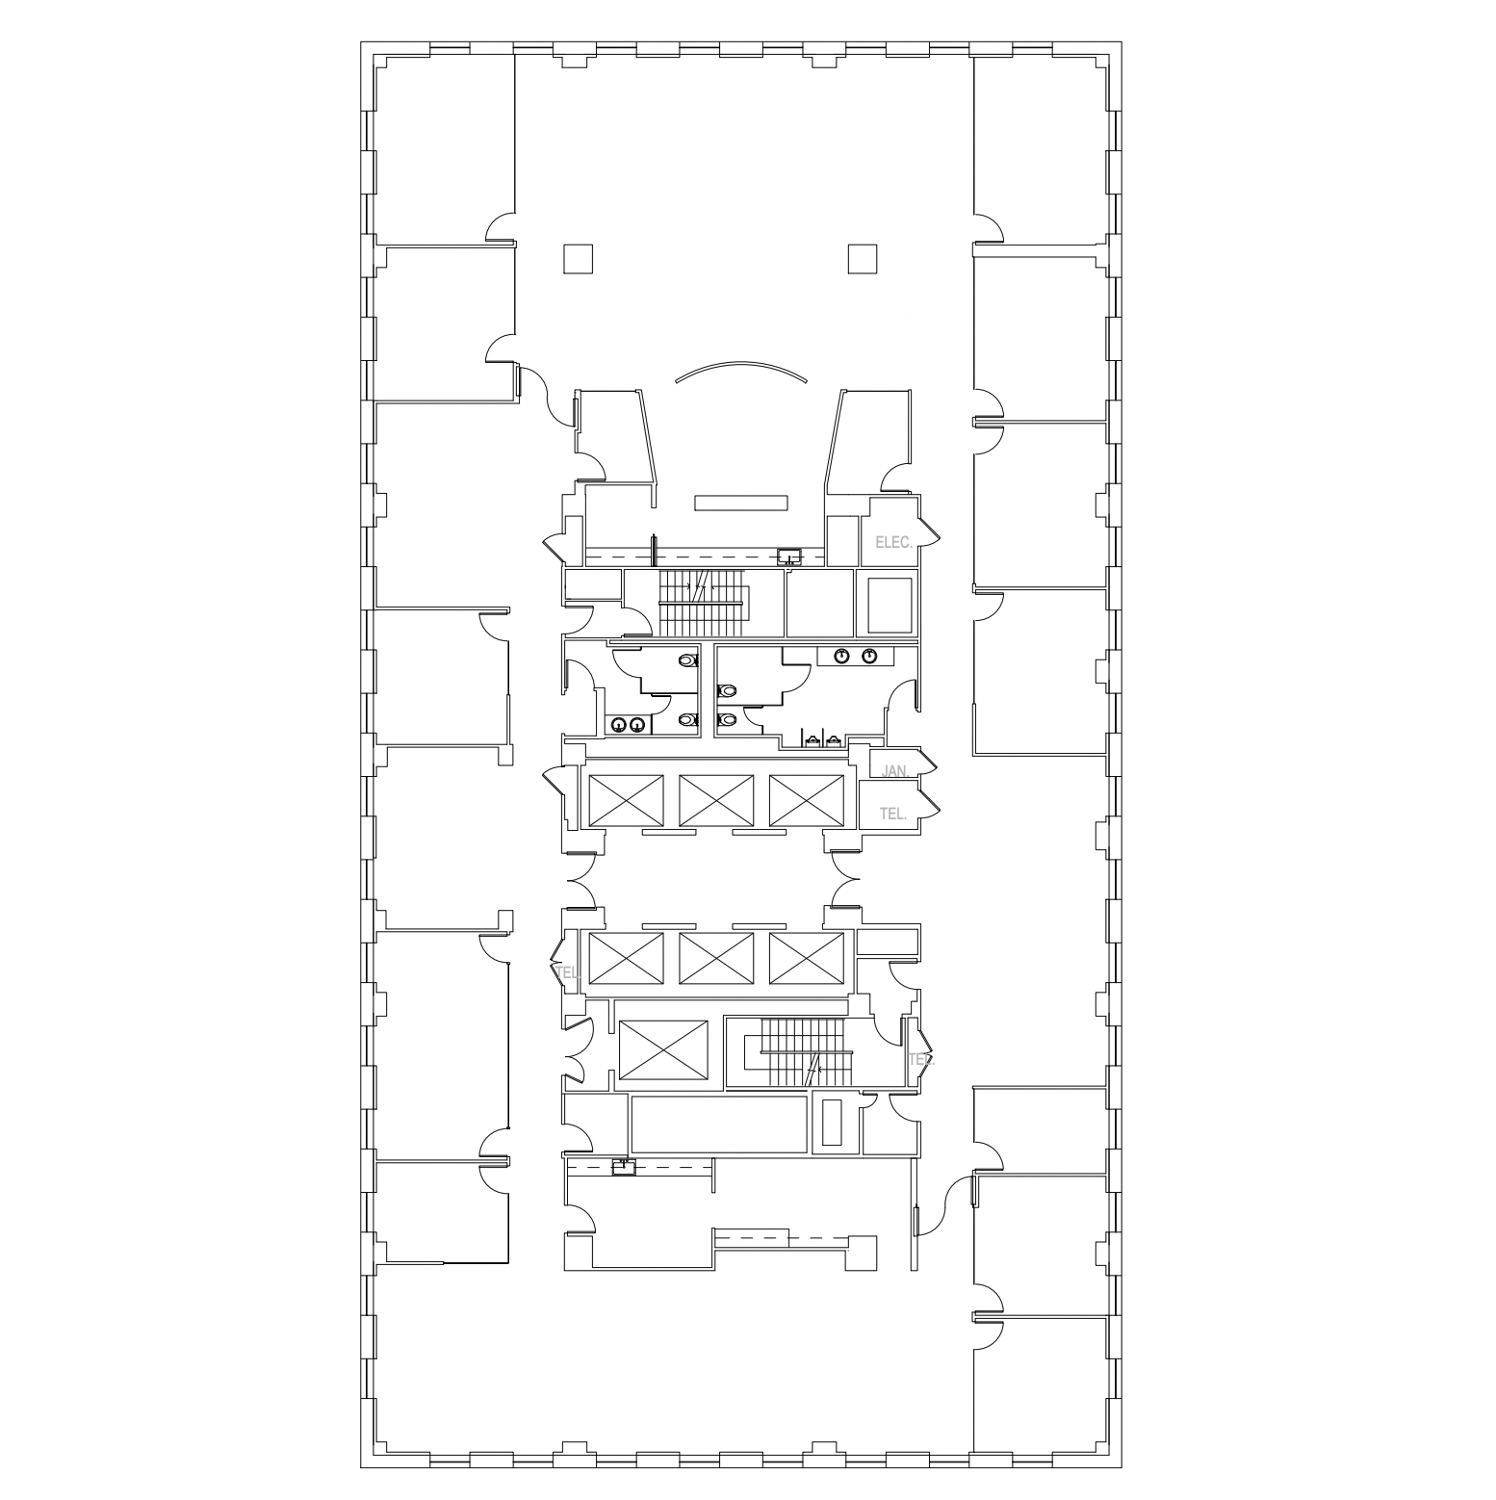 Market Center 35th Floor floorplan, illustration via Paramount Group